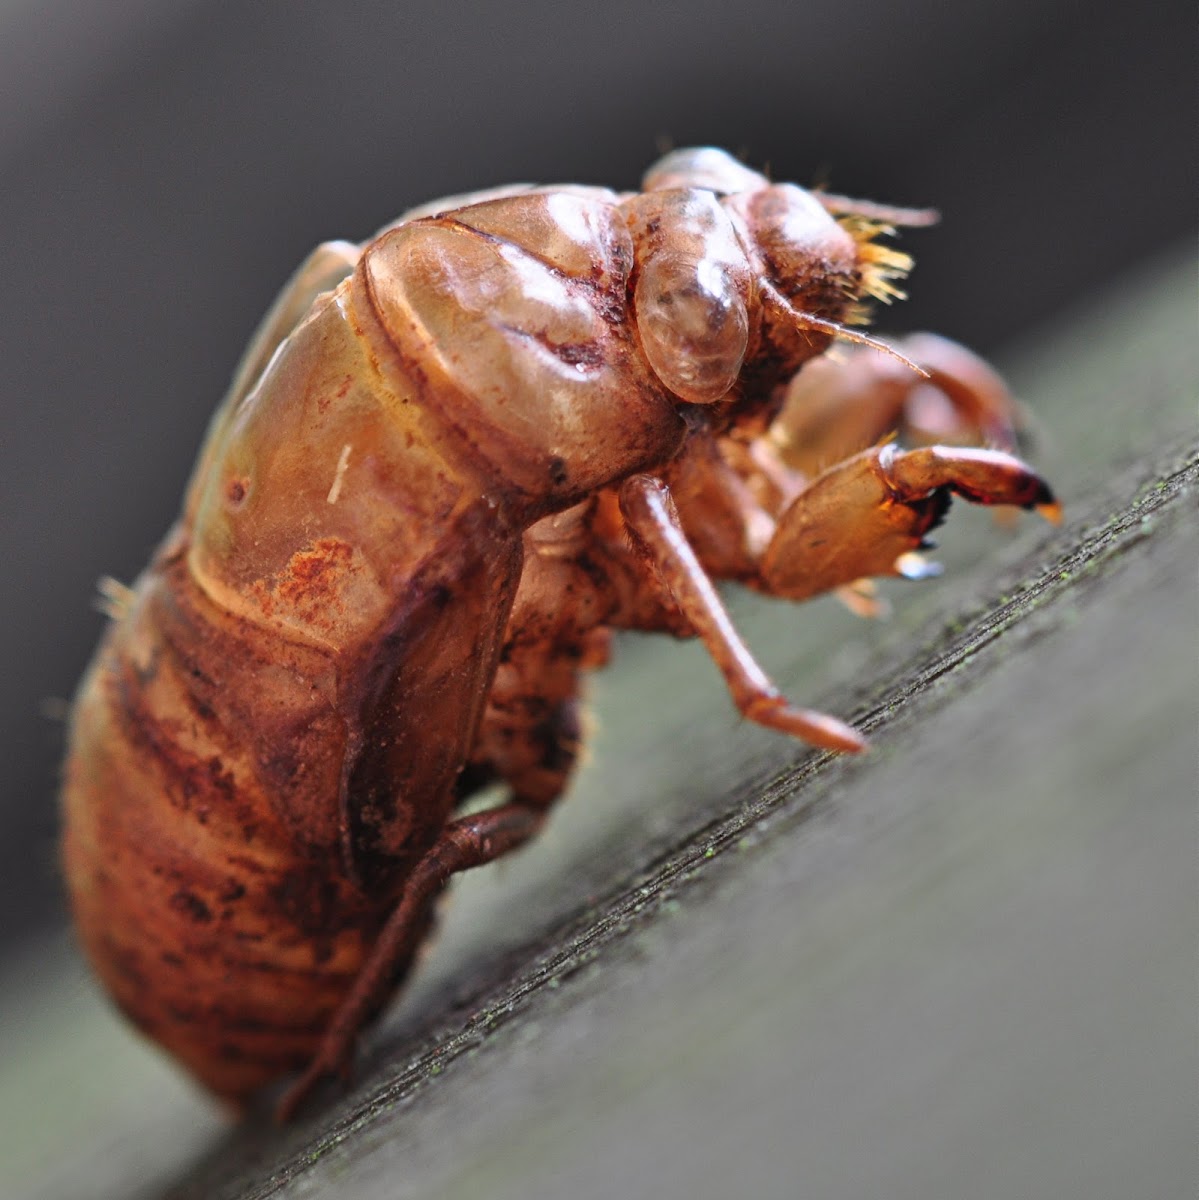 Cicada (Shell)